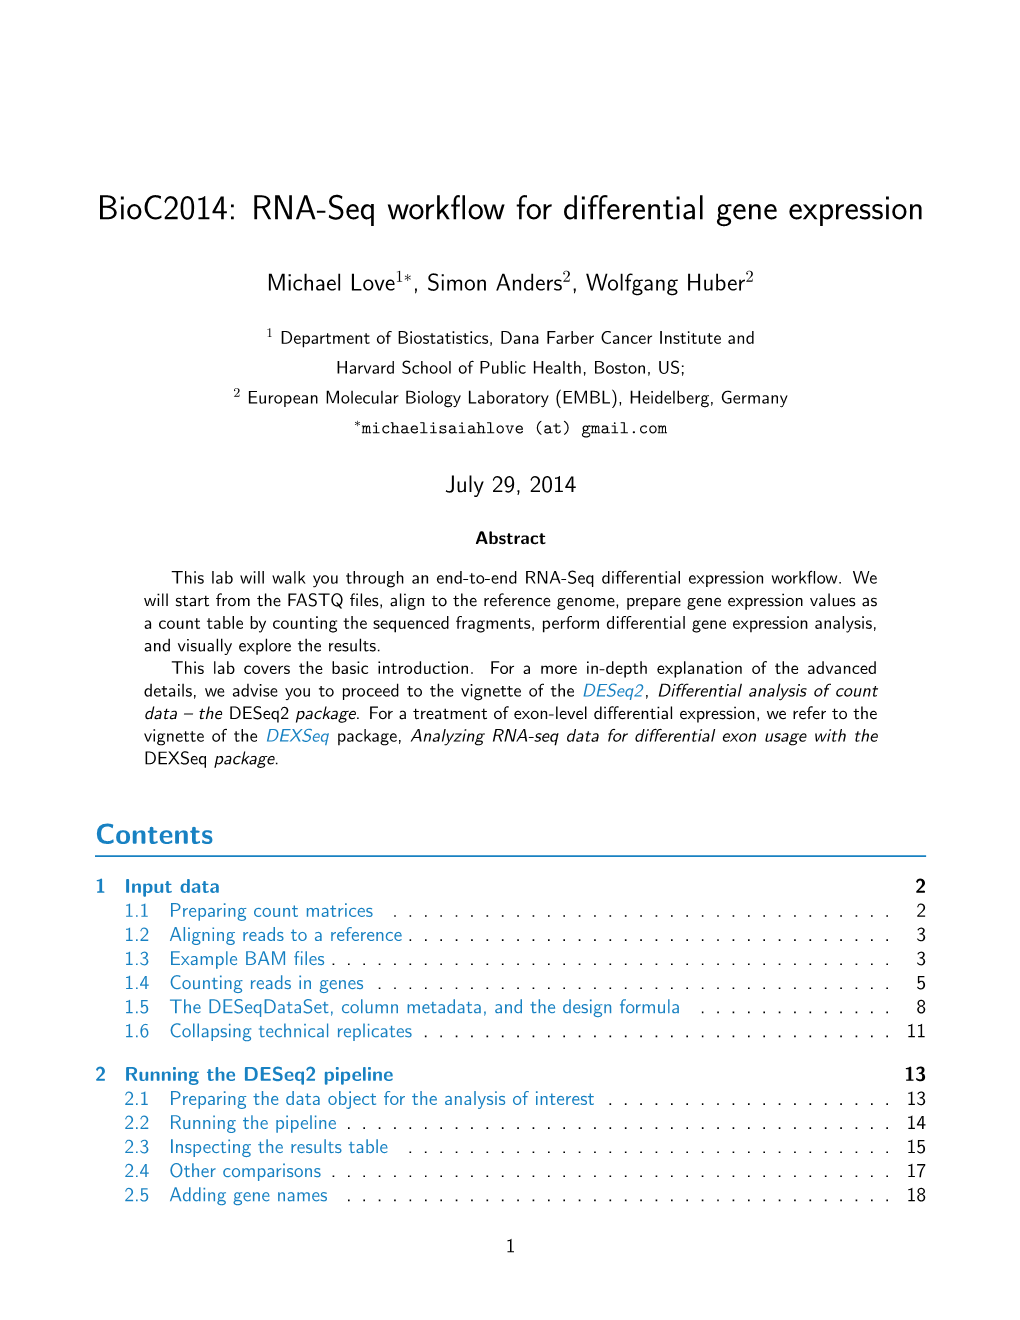 Bioc2014: RNA-Seq Workflow for Differential Gene Expression